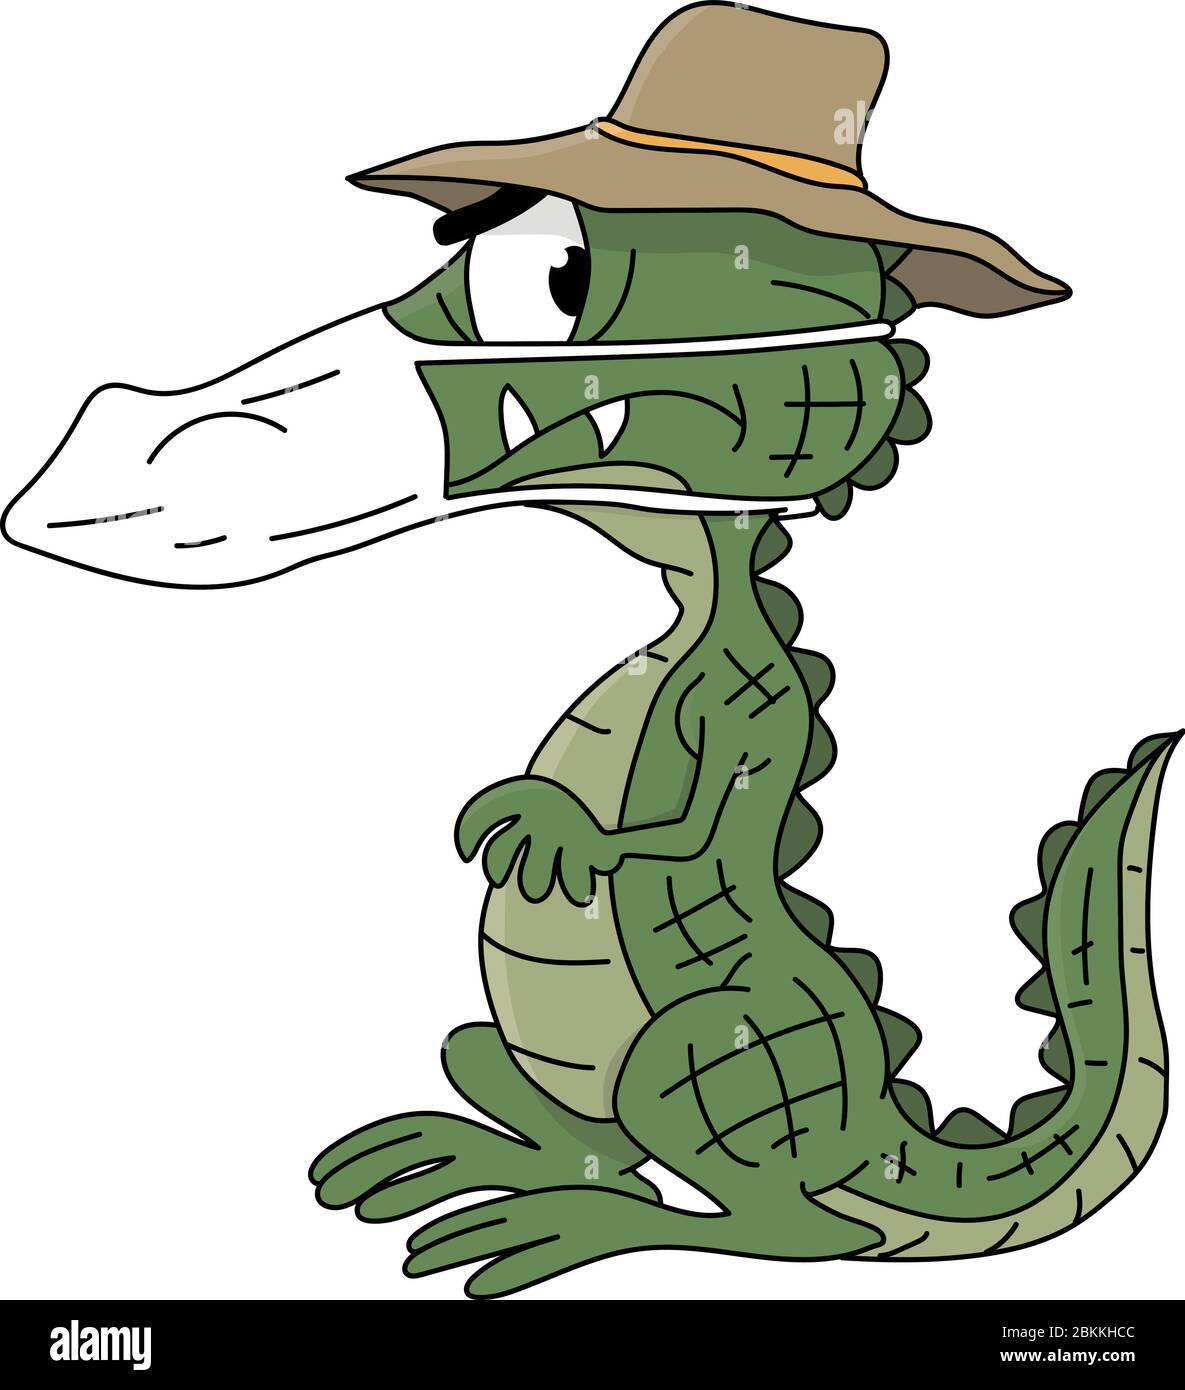 Cartoon alligator wearing a protective mask against corona virus vector illustration Stock Vector